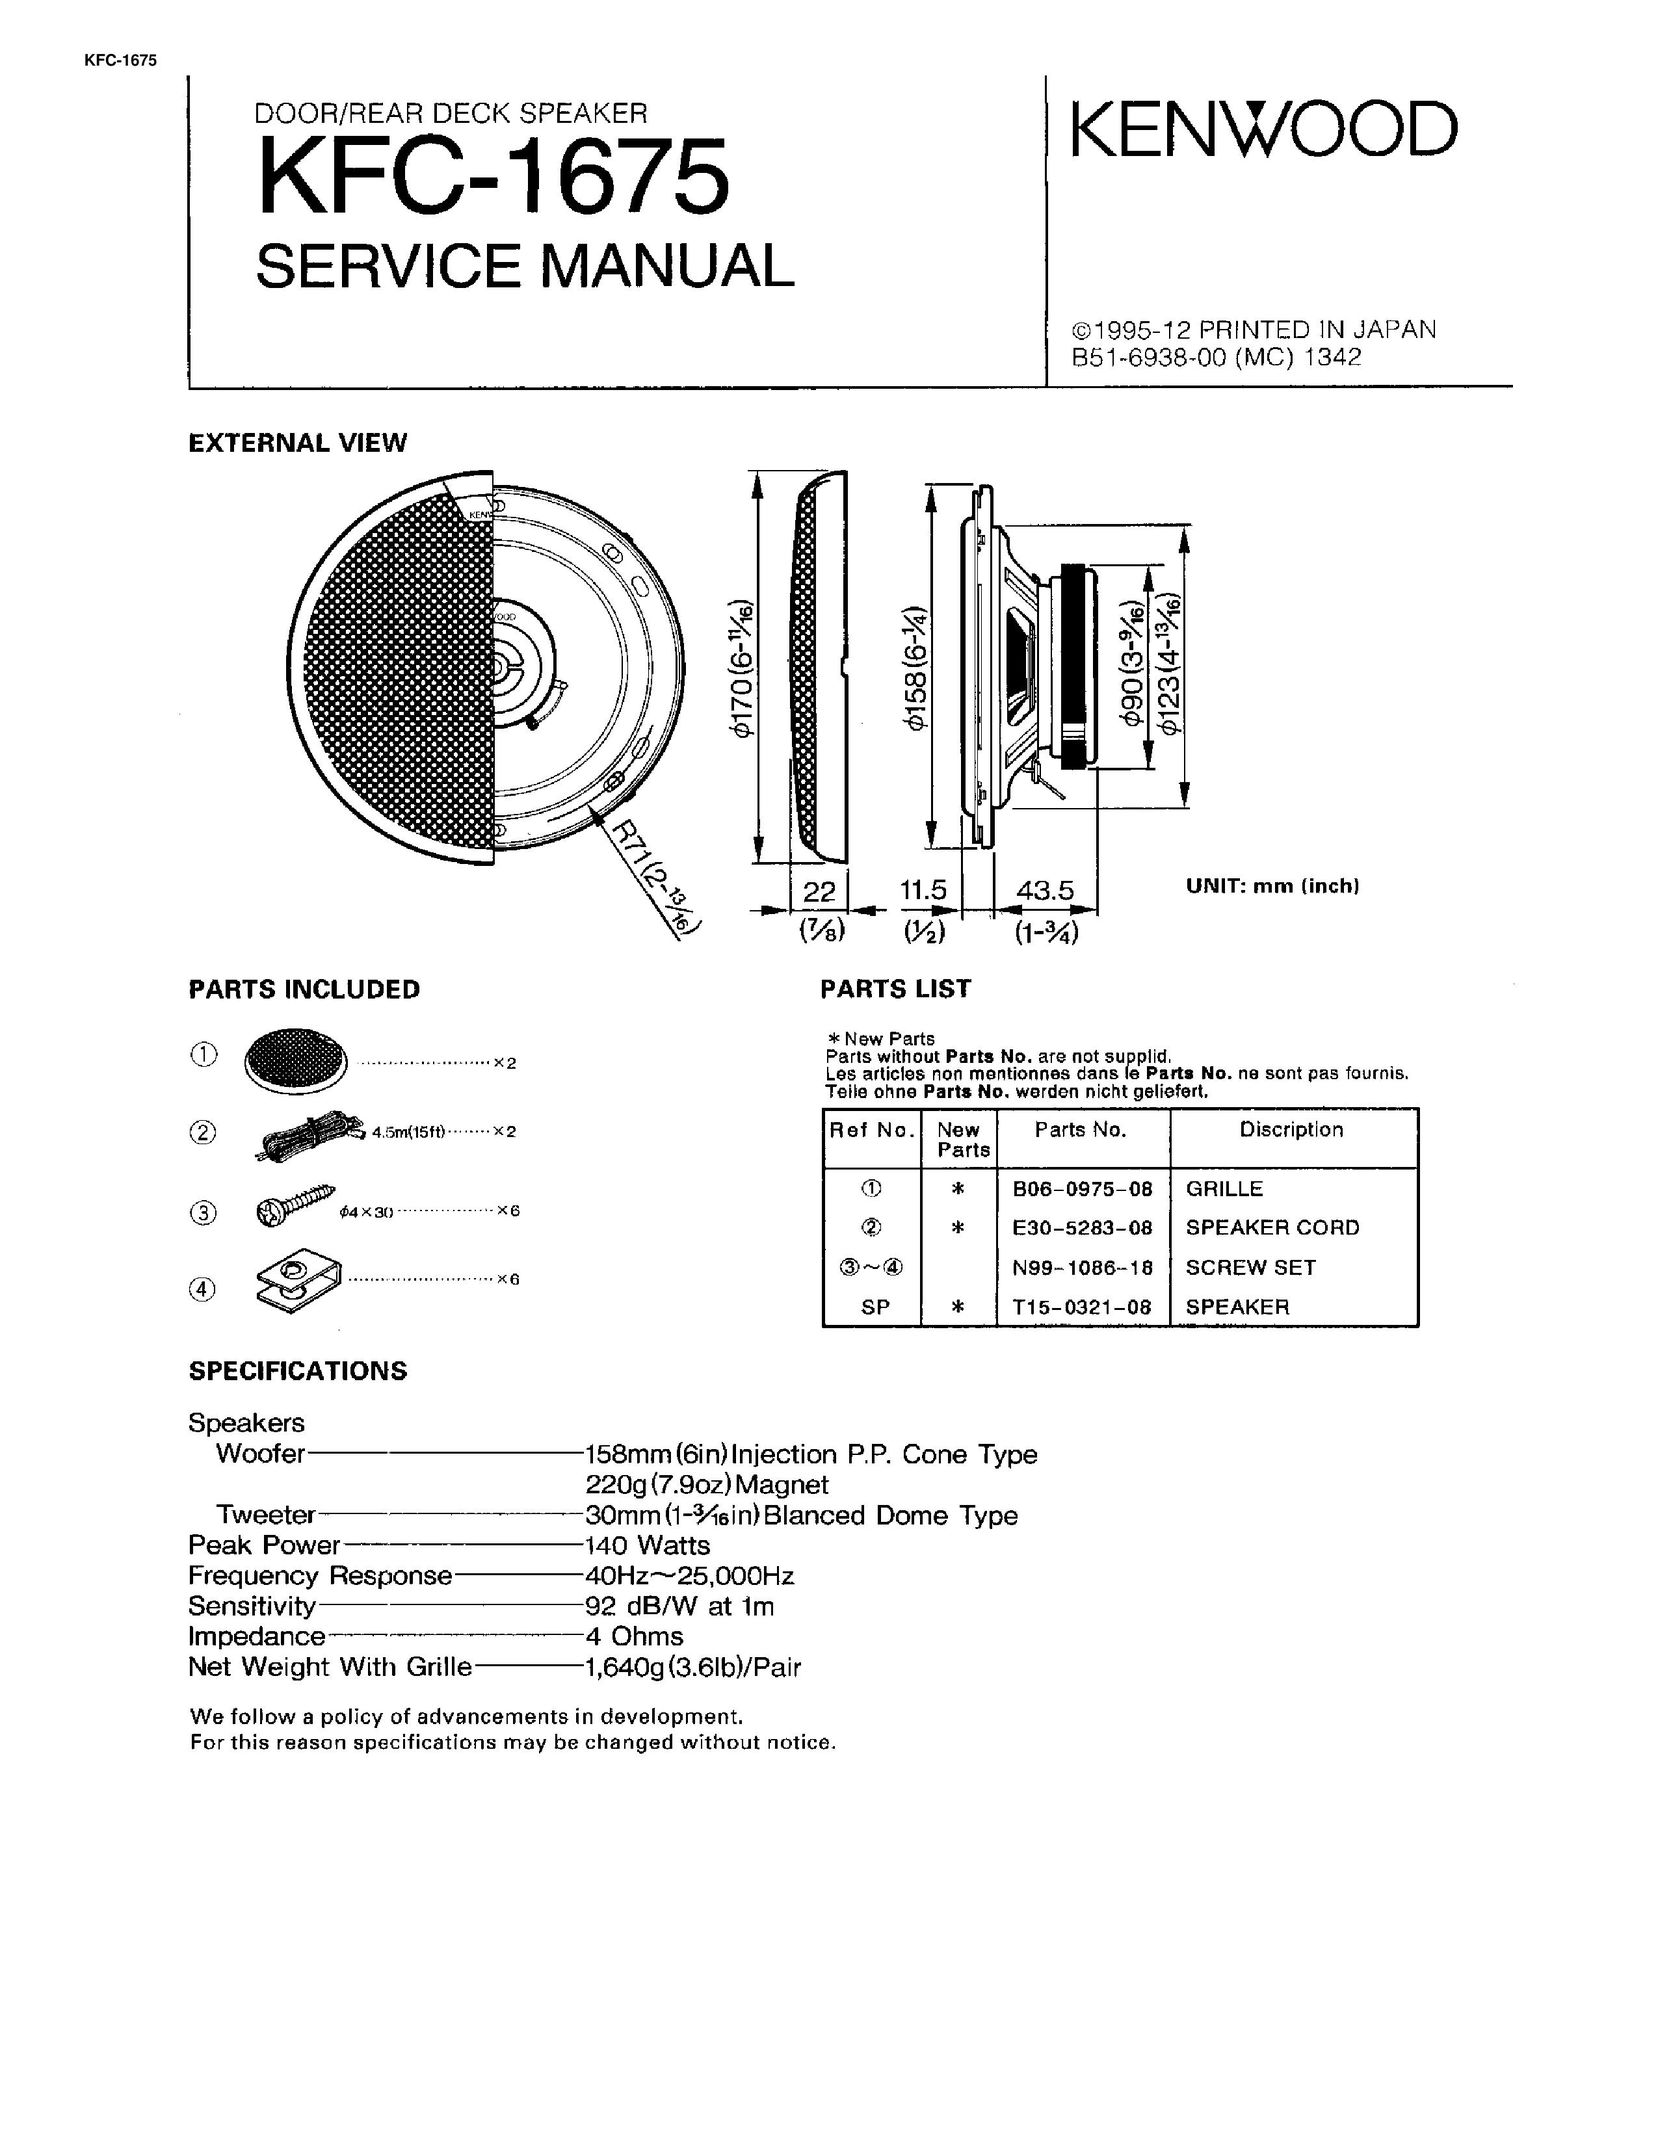 Kenwood KFC-1675 Car Speaker User Manual